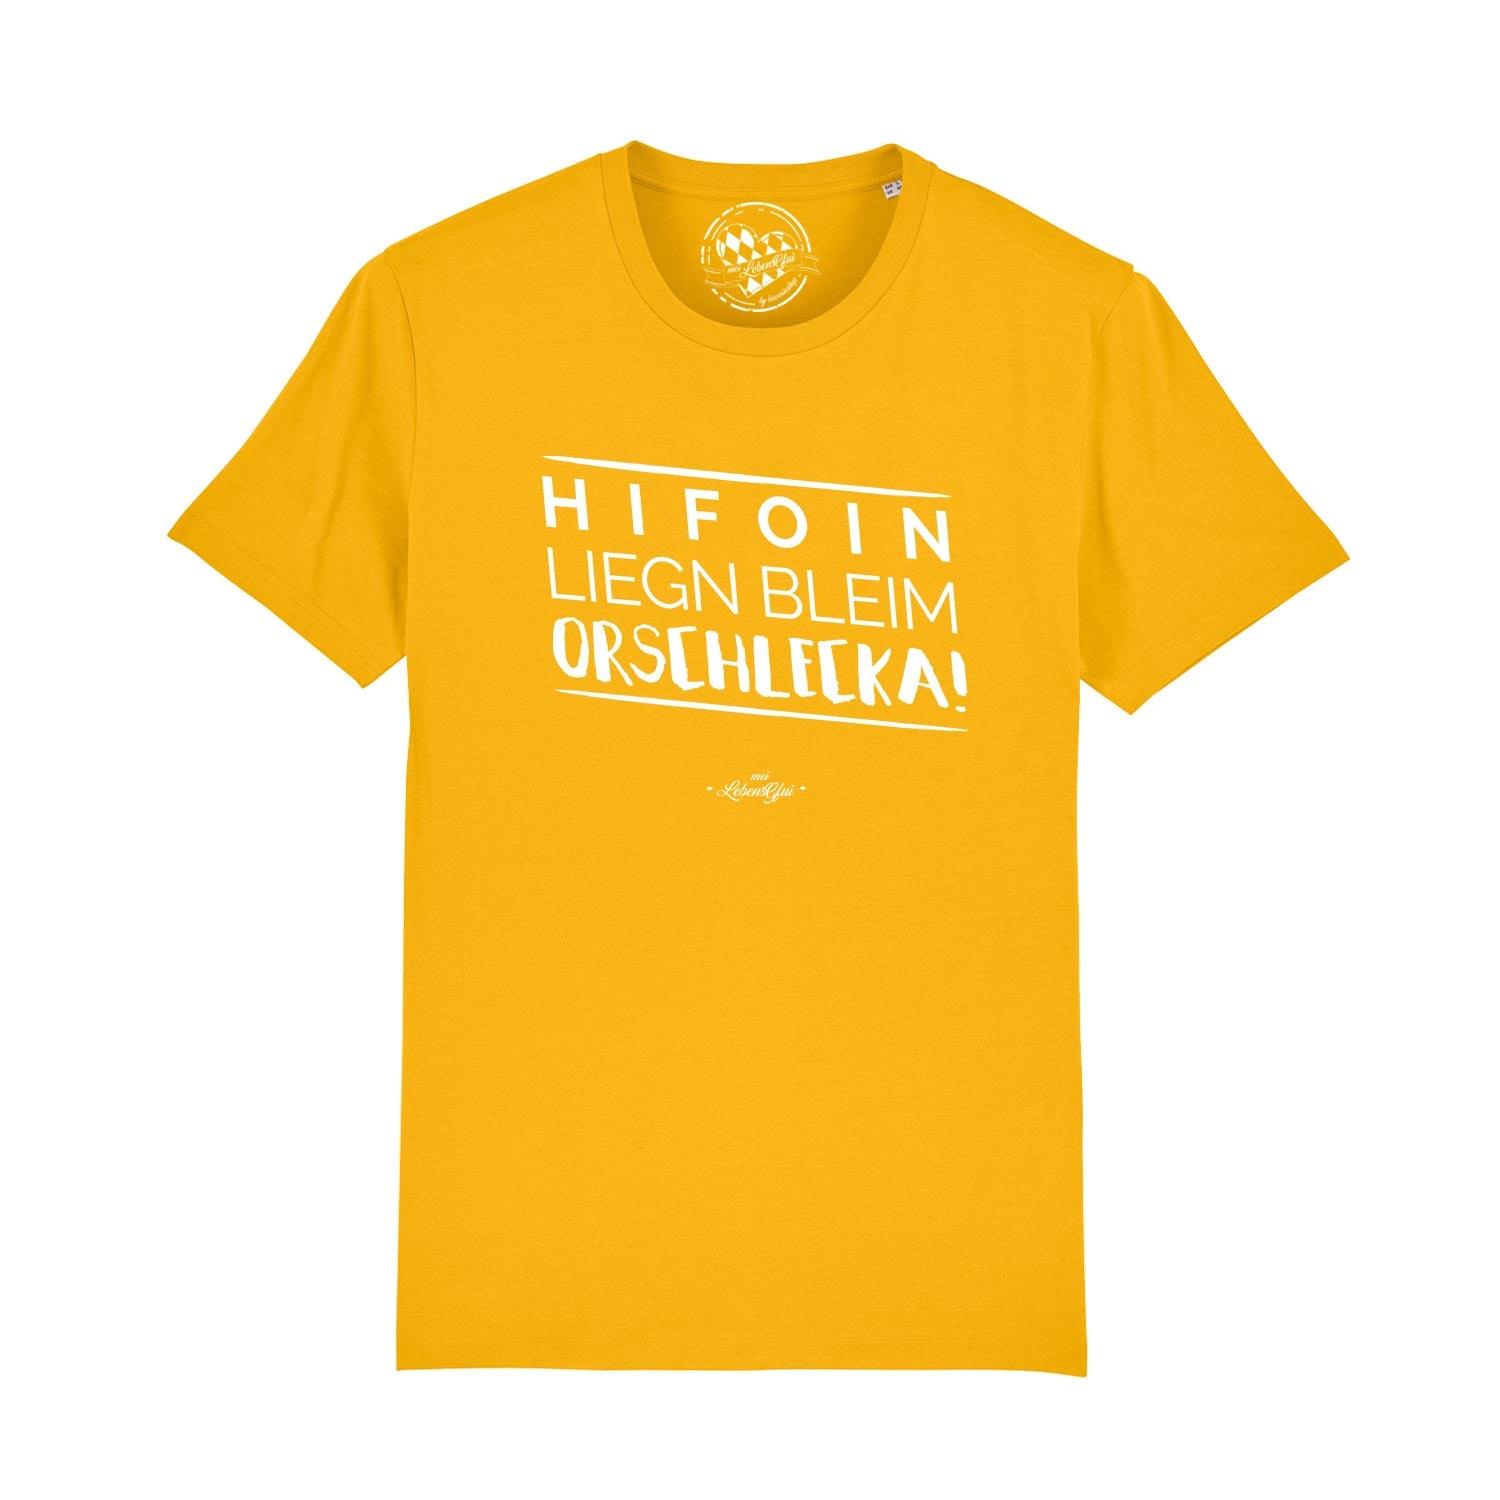 Herren T-Shirt "Hifoin liegn bleim..." - bavariashop - mei LebensGfui